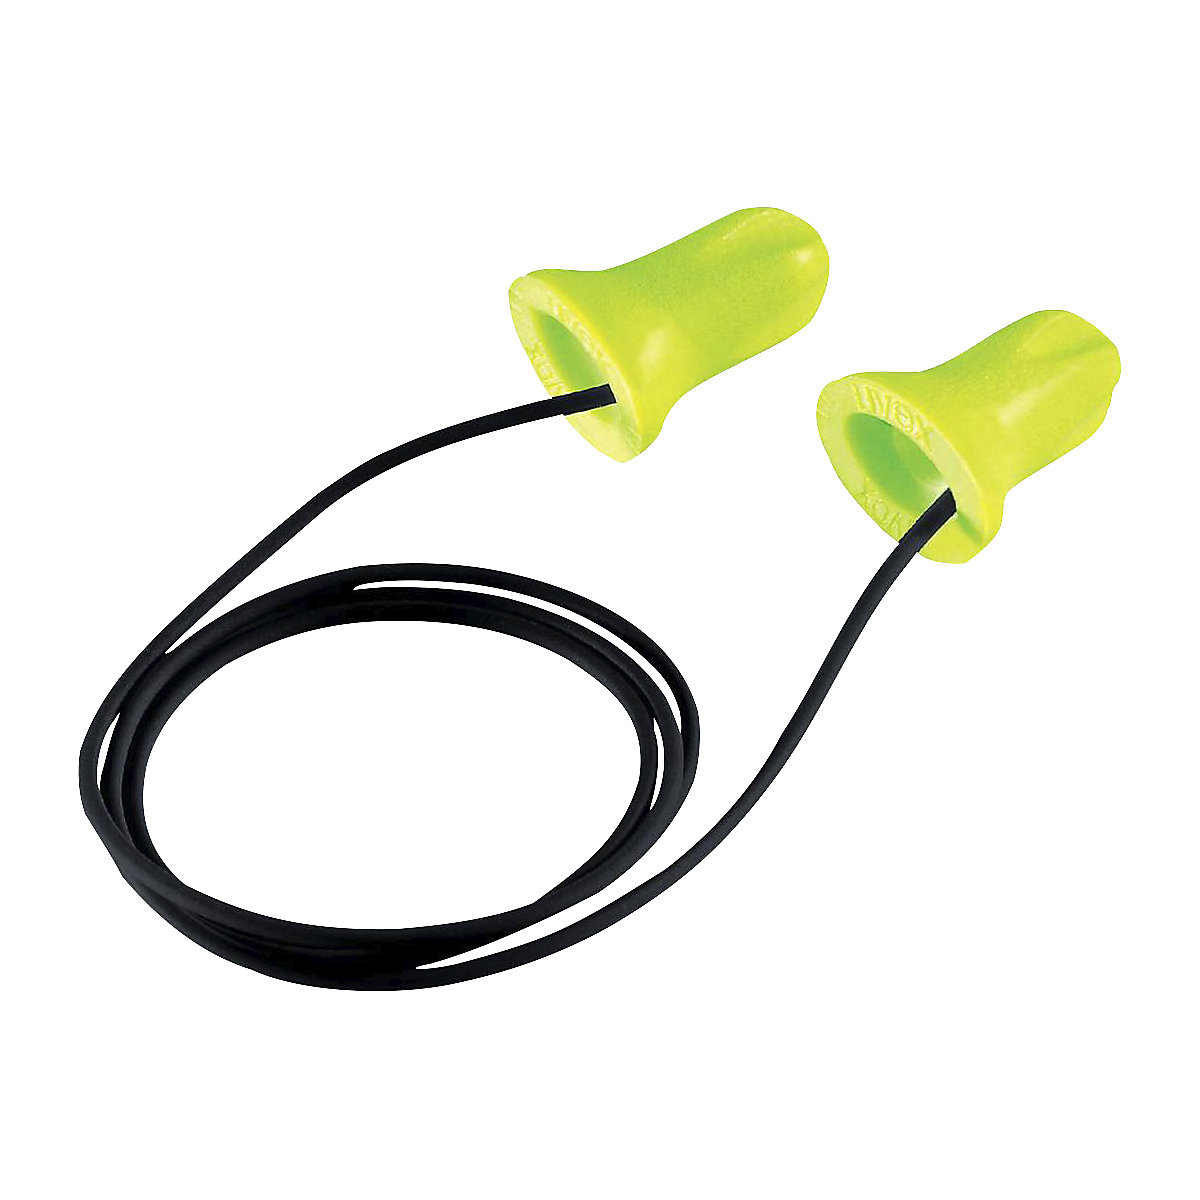 hi-com 2112101 earplug with cord – Uvex